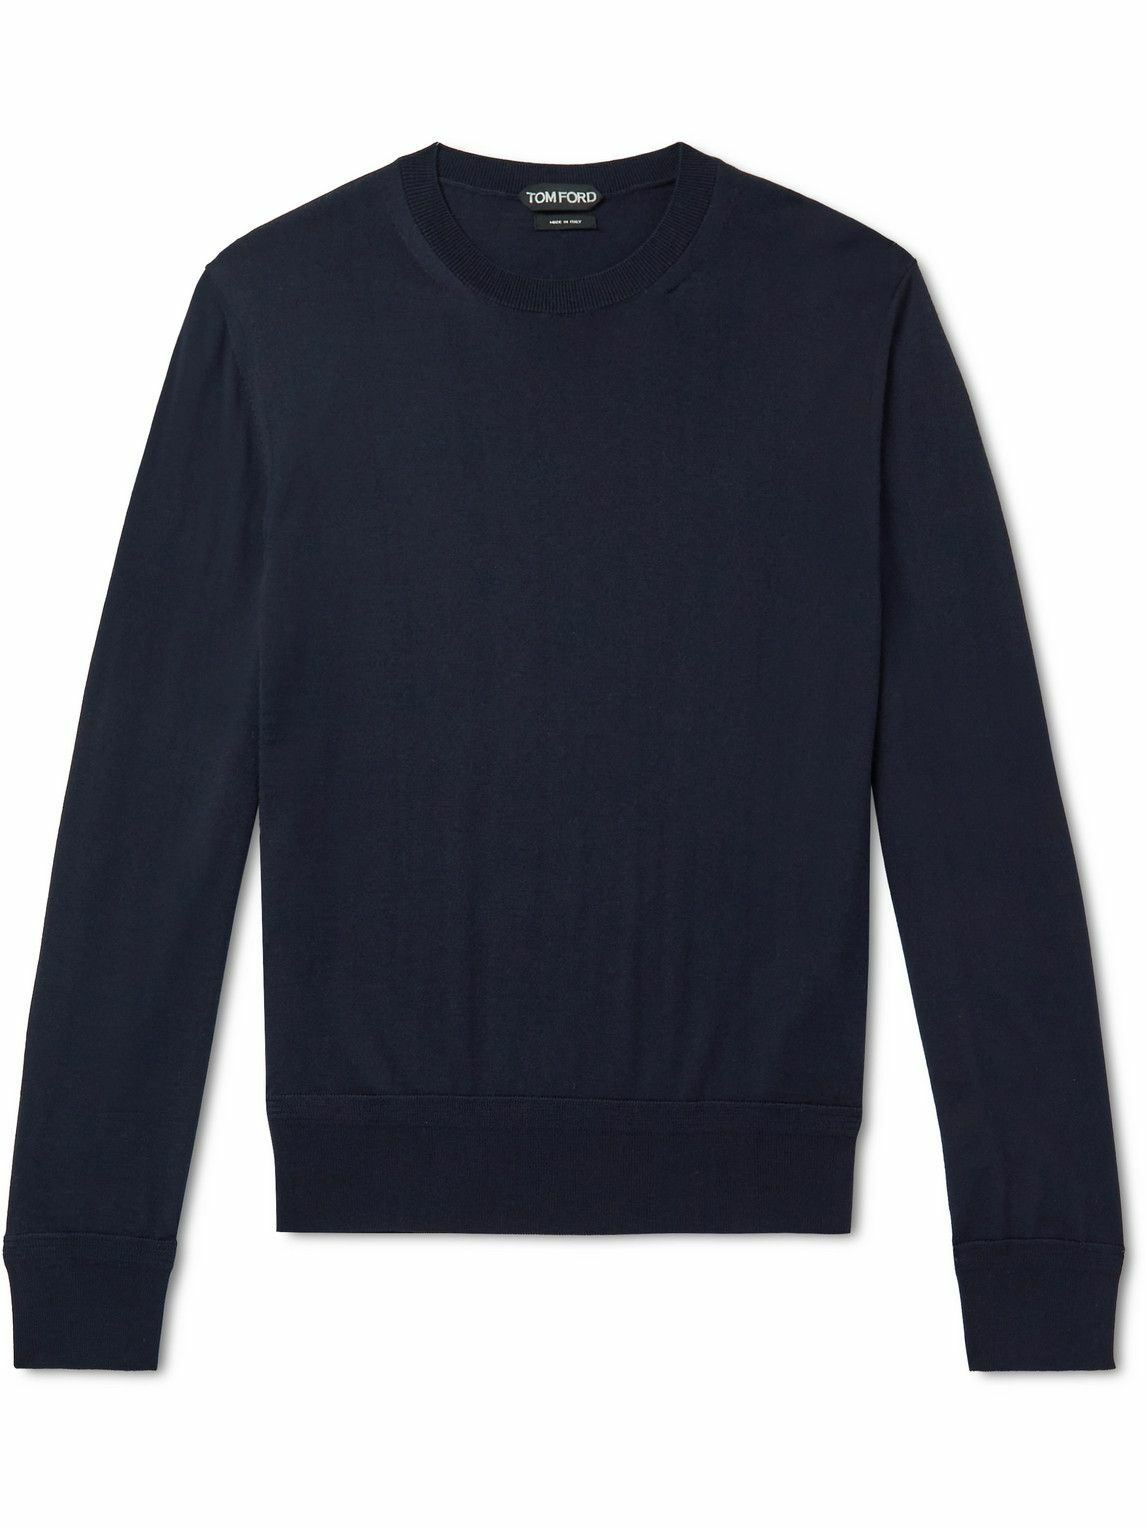 TOM FORD - Merino Wool Sweater - Blue TOM FORD